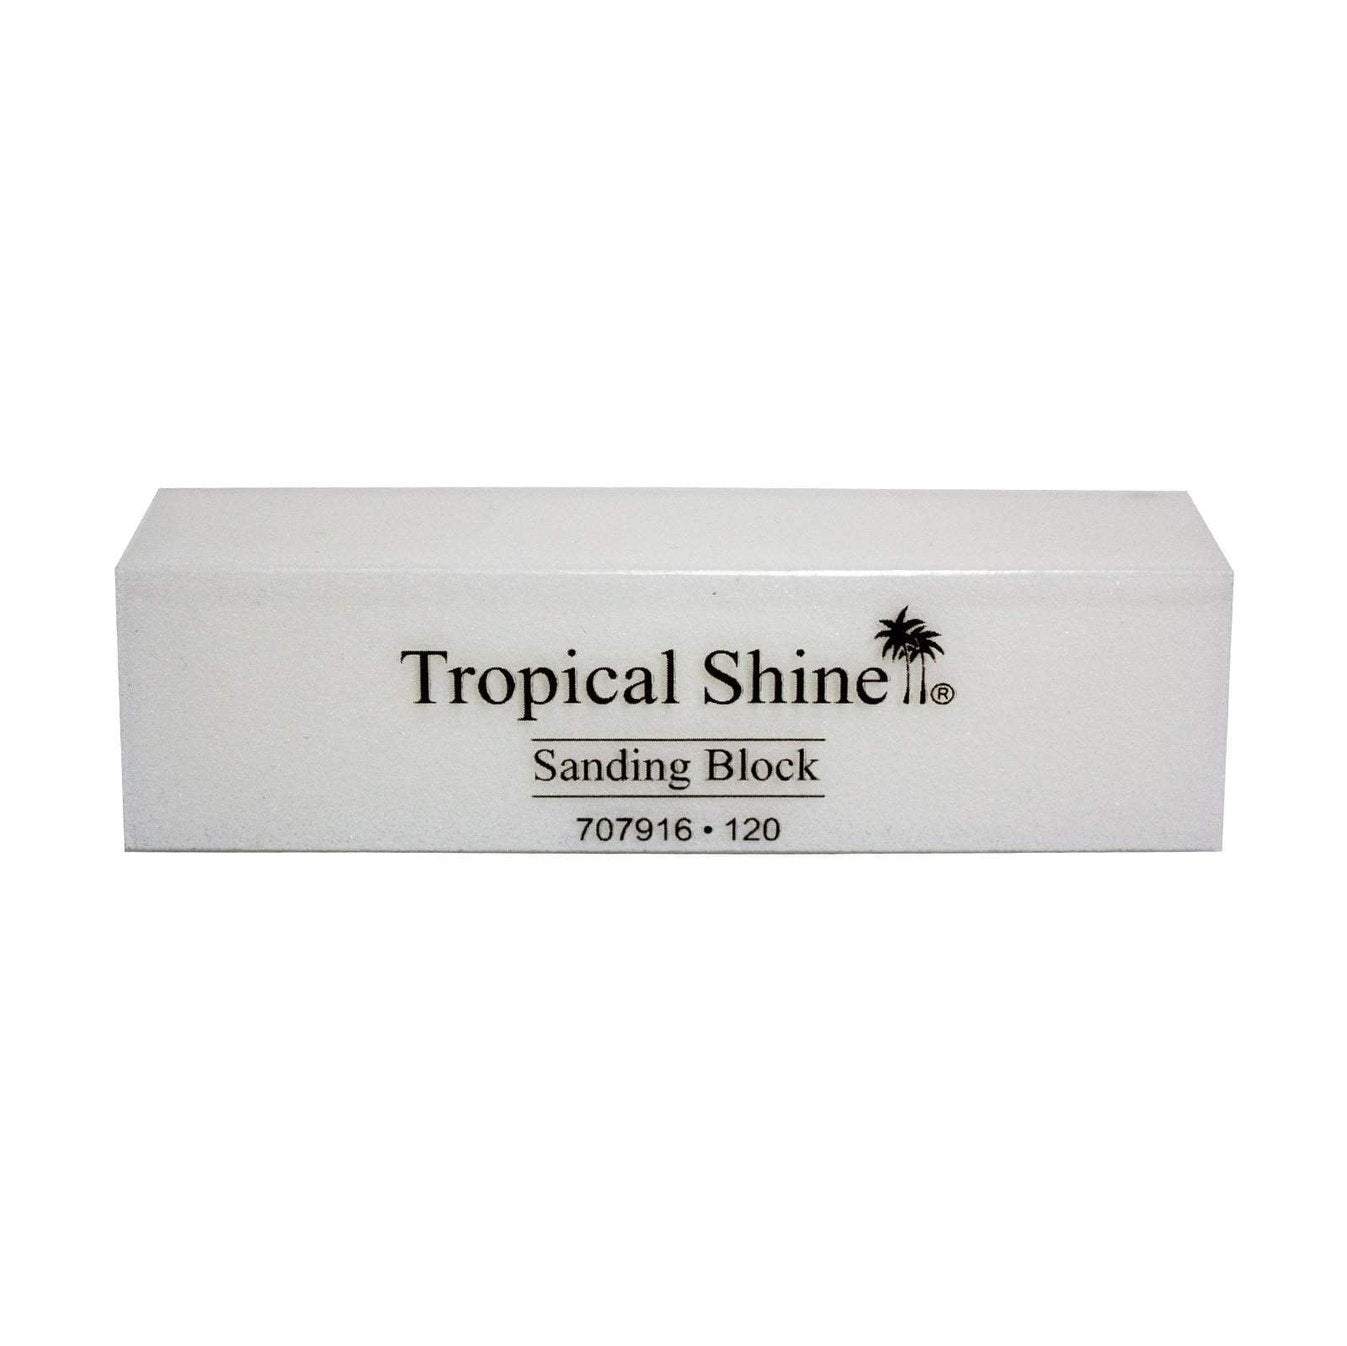 Tropical Shine Nail File White Sanding Block 120 (Coarse) (707916)